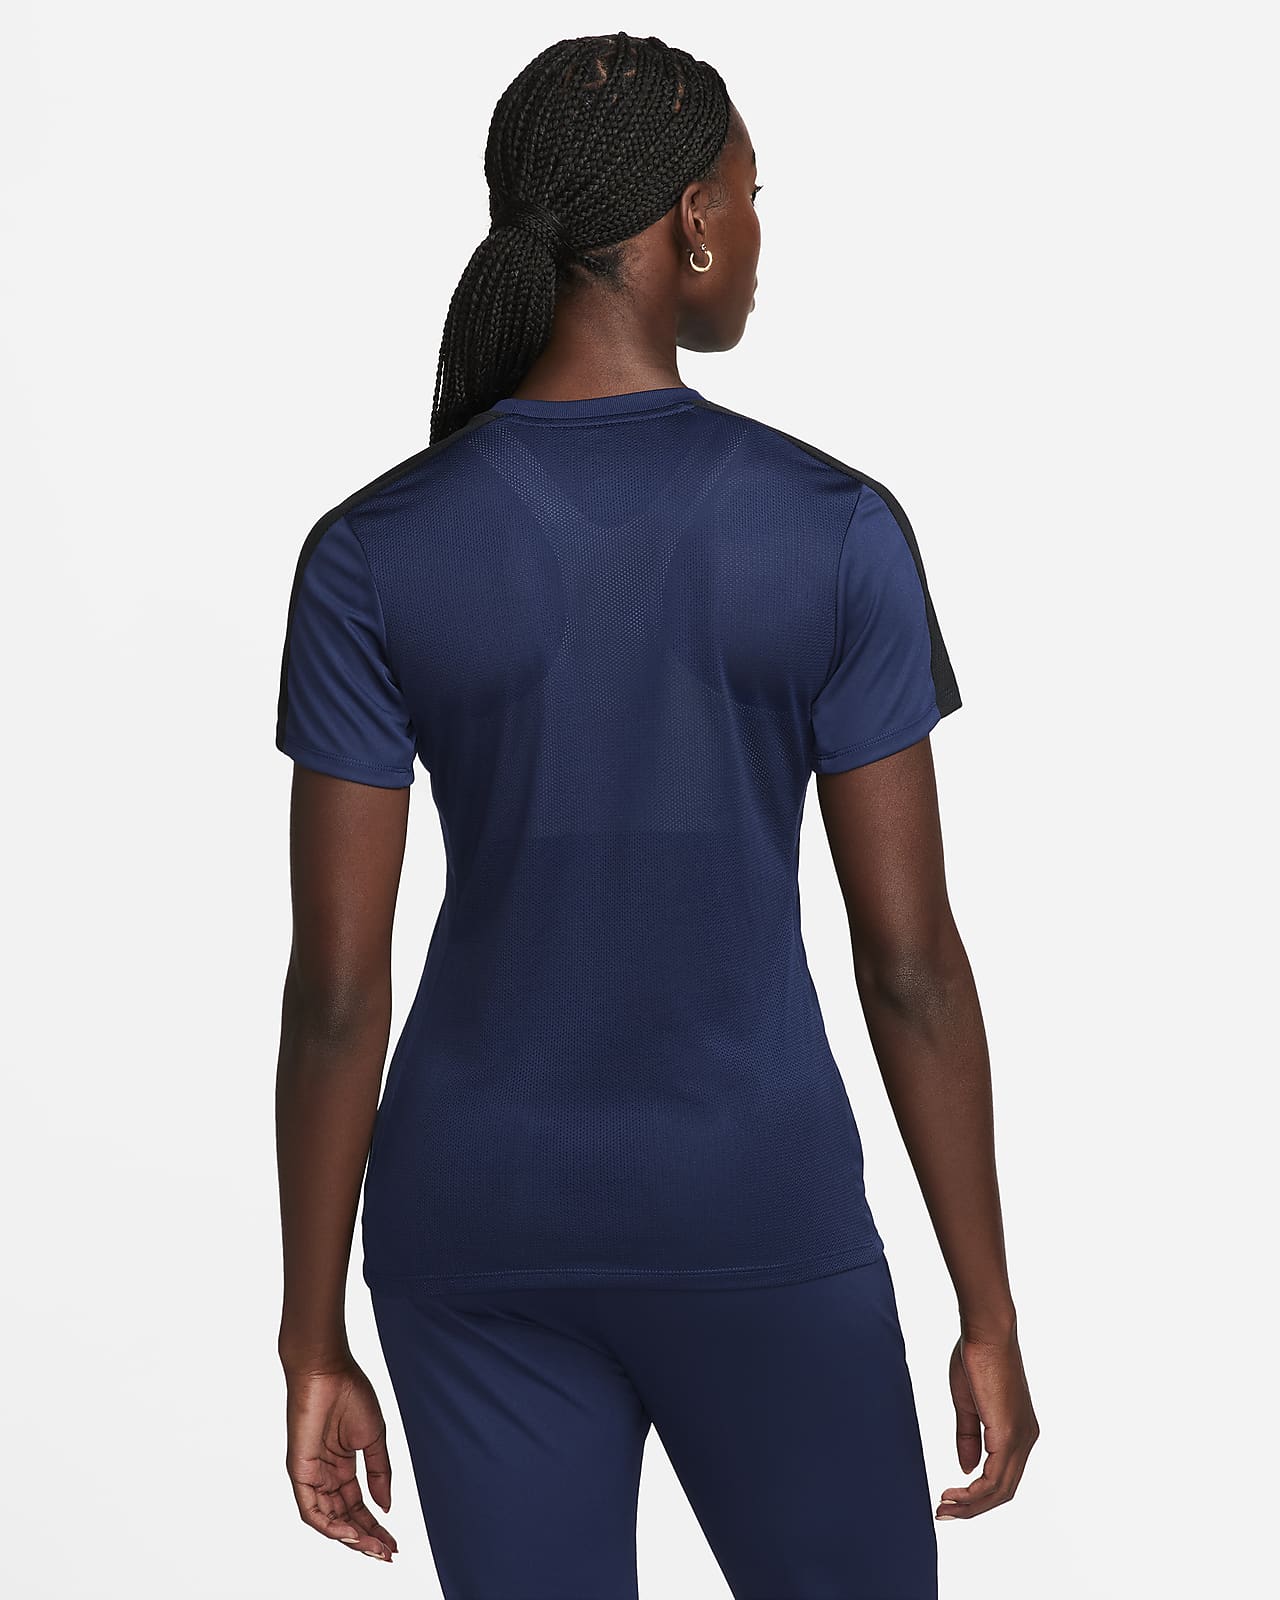 Nike Dri-fit Yoga Layer Womens Short-Sleeve Training Top Cj9326-010 Size XS